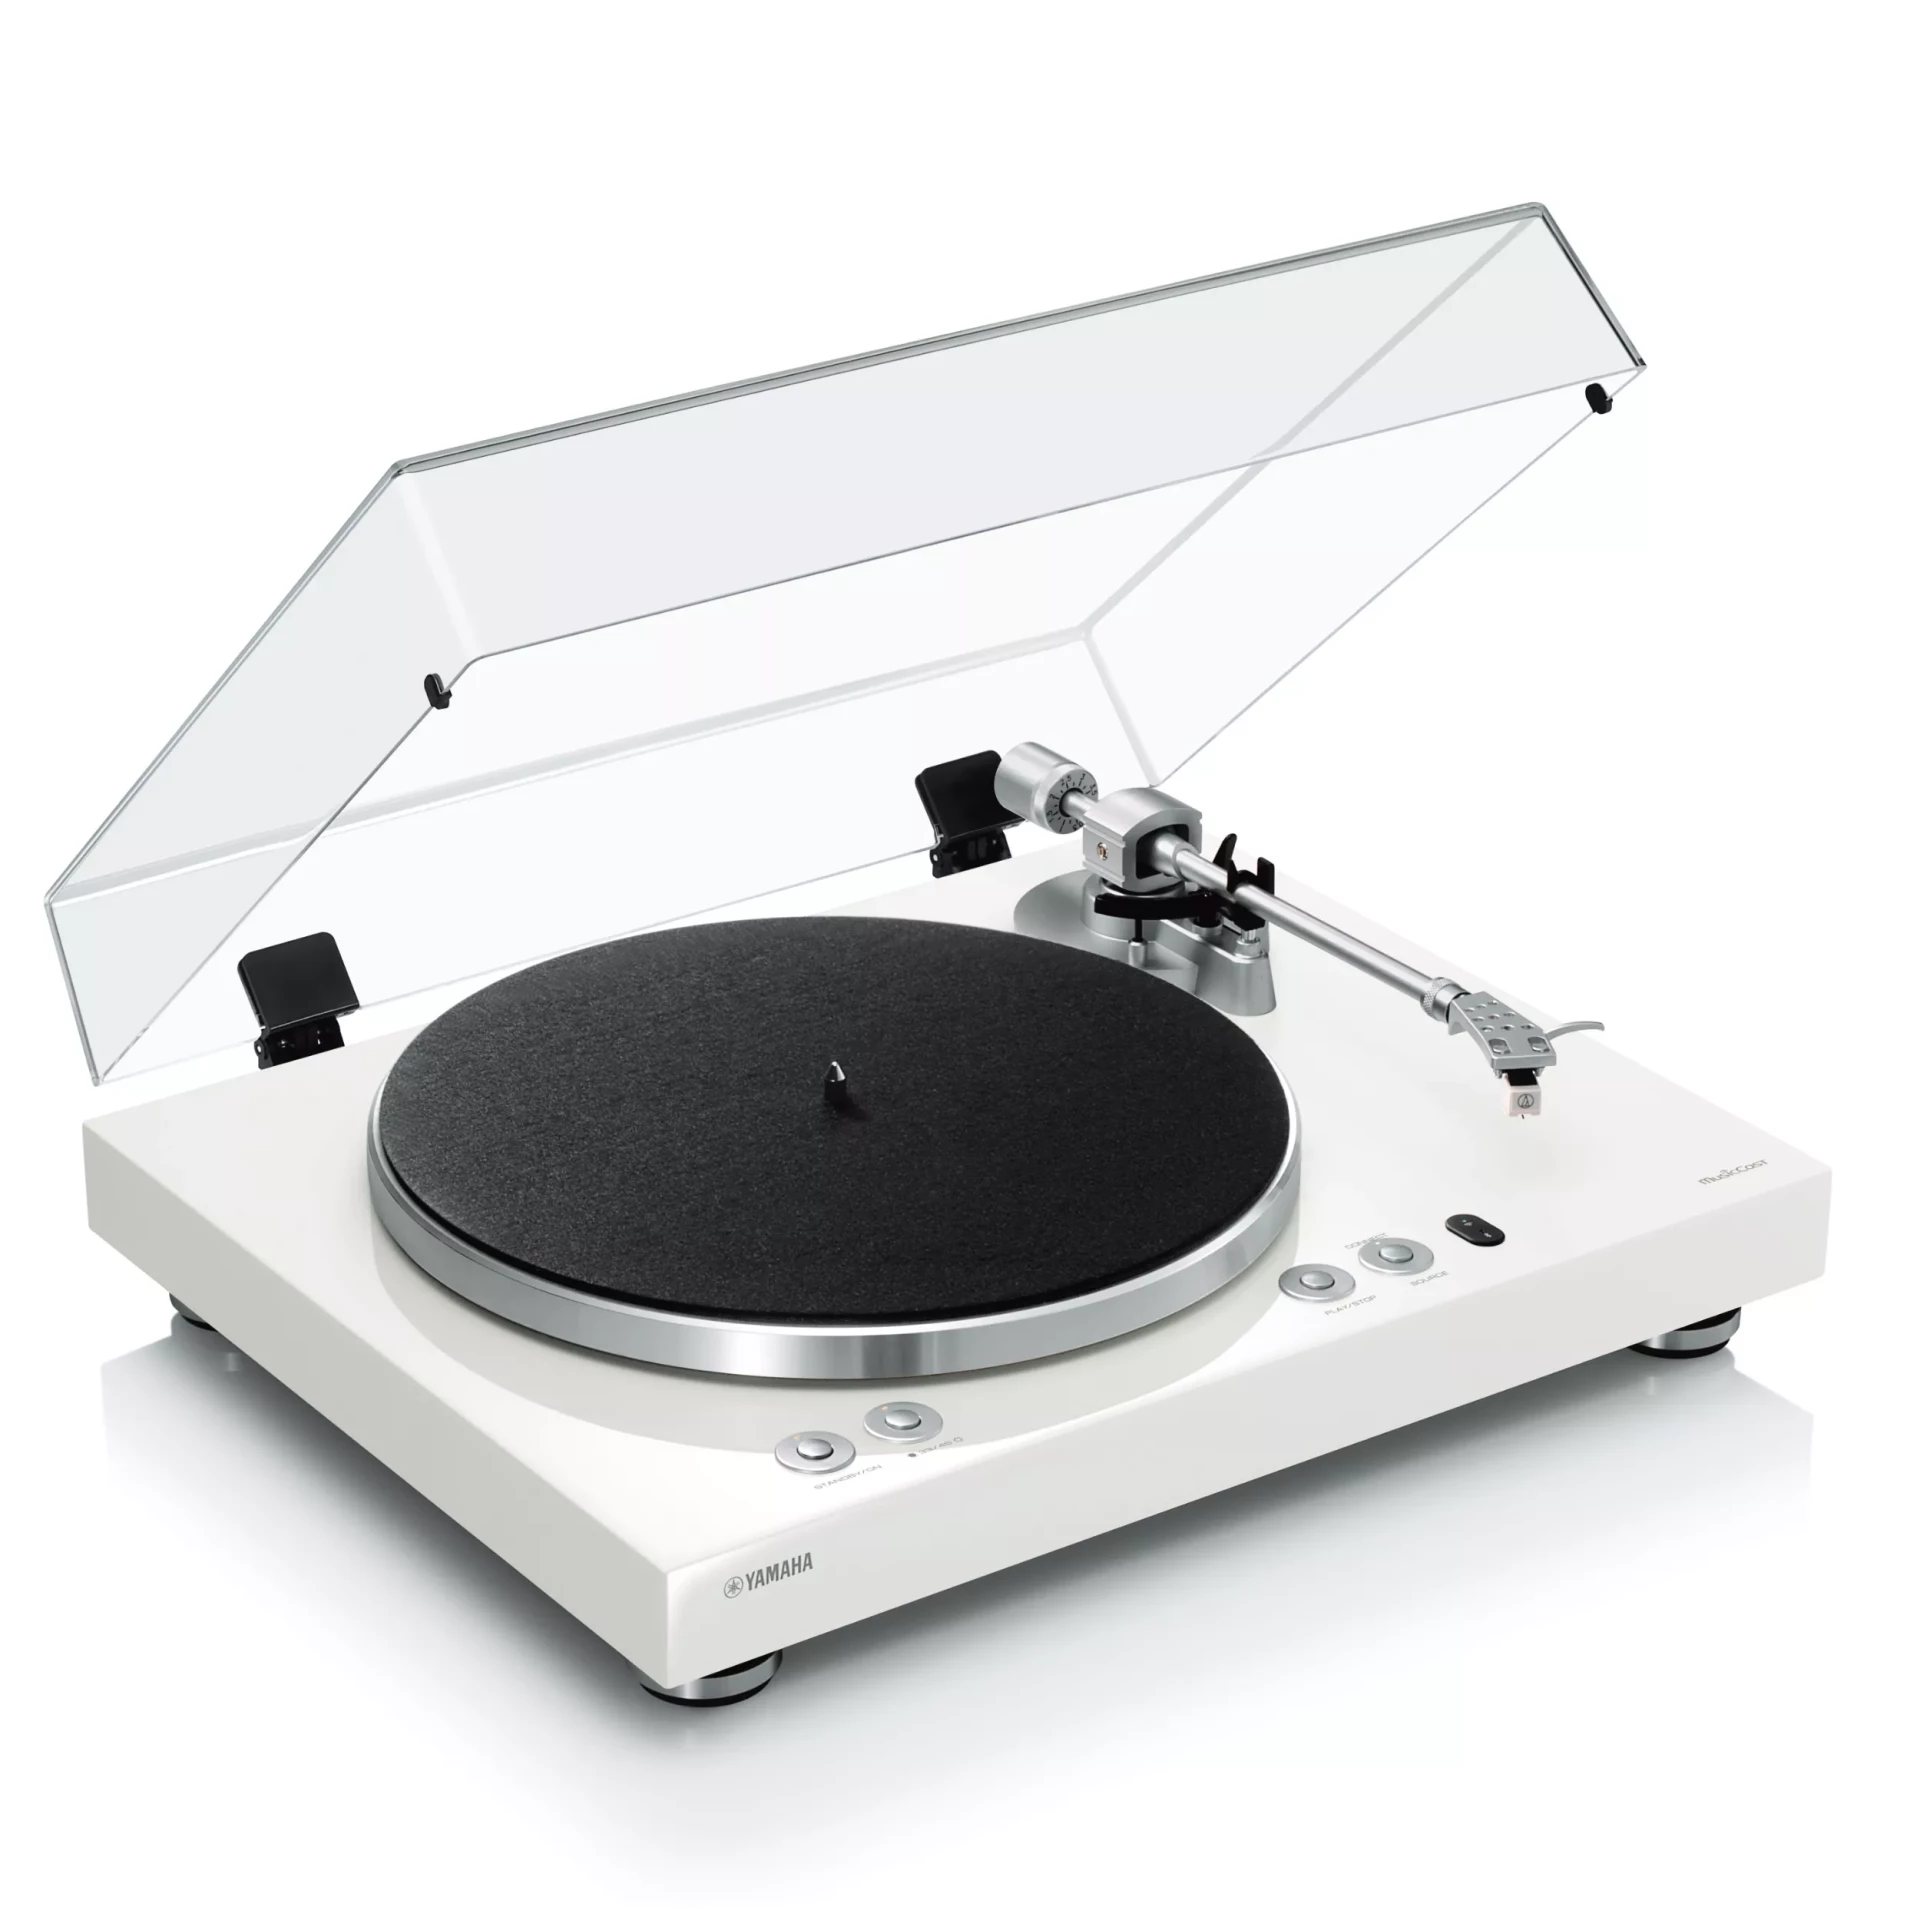 Yamaha Vinyl 500 Schallplattenspieler mit Phonoverstärker